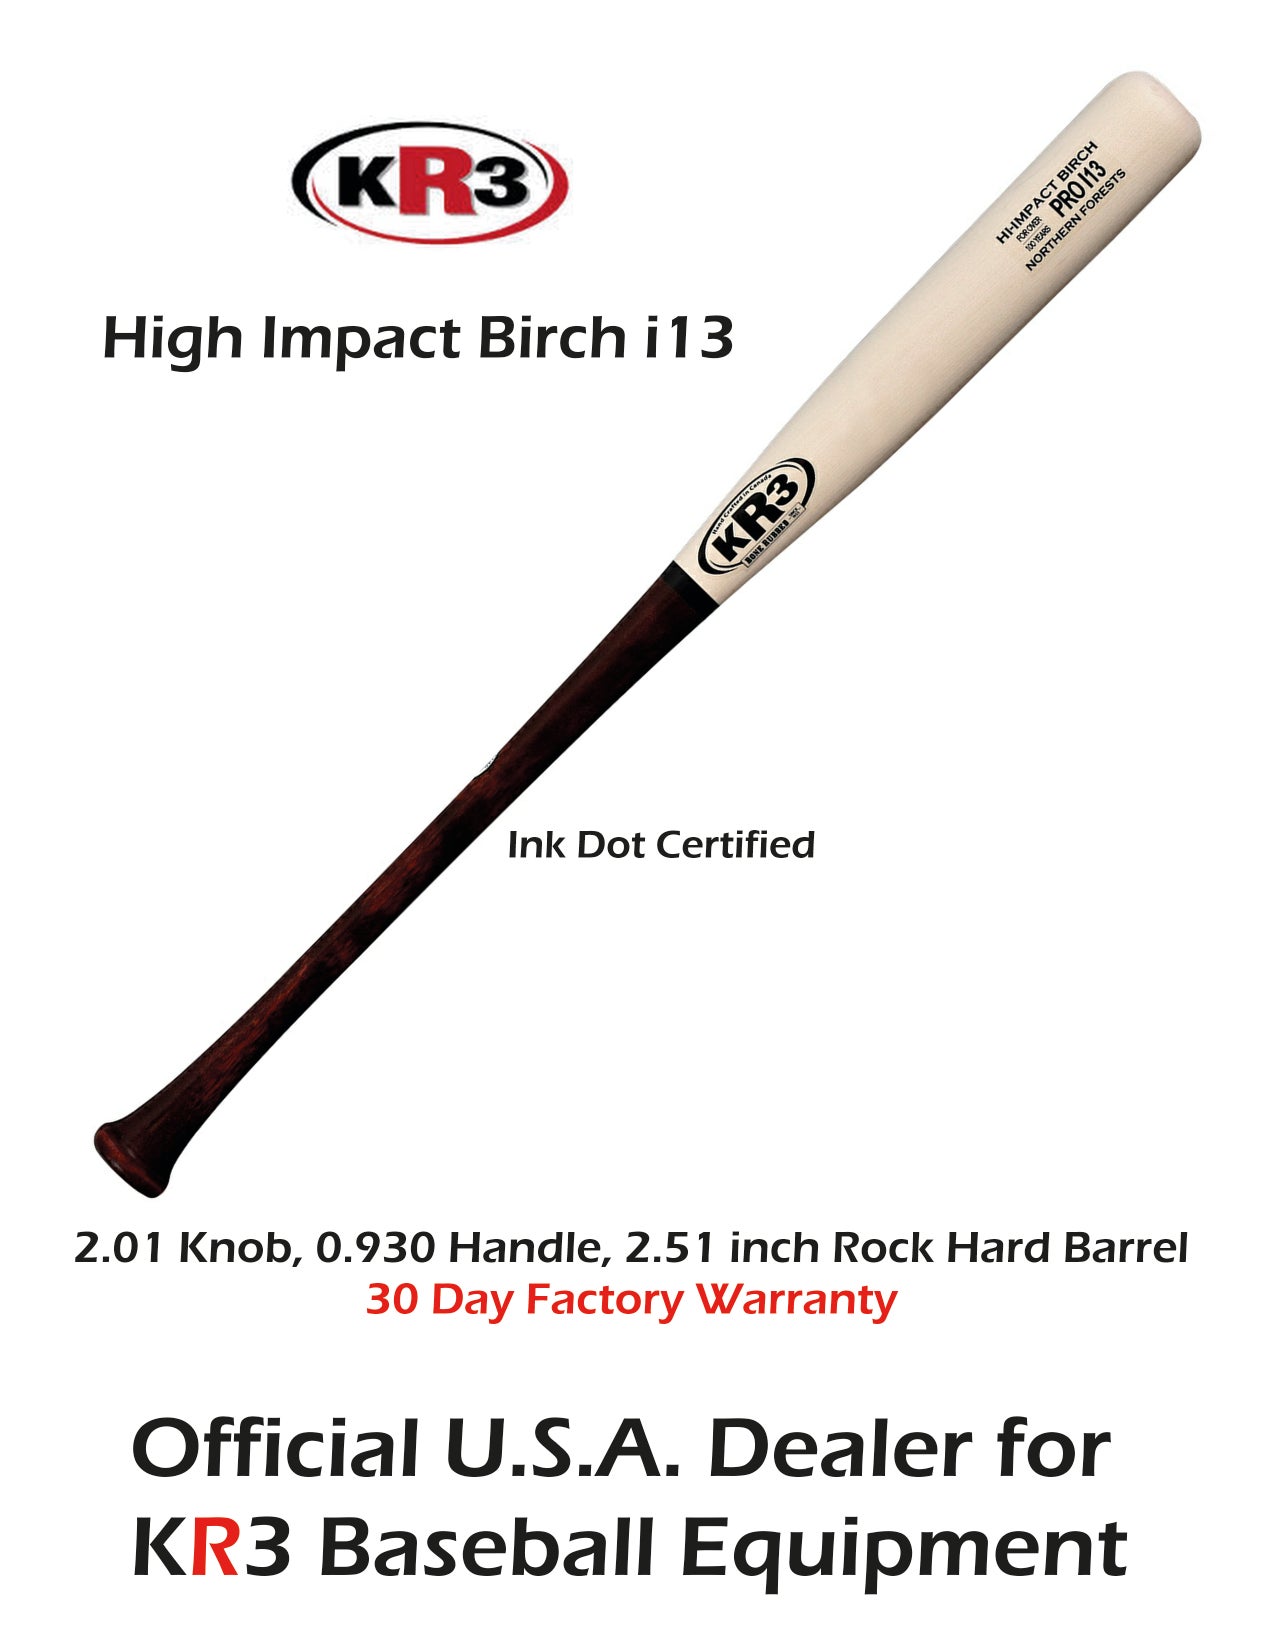 KR3 i13 High Impact Birch 34 inch Wood Bat (-3) 31.5 oz 1 month factory warranty